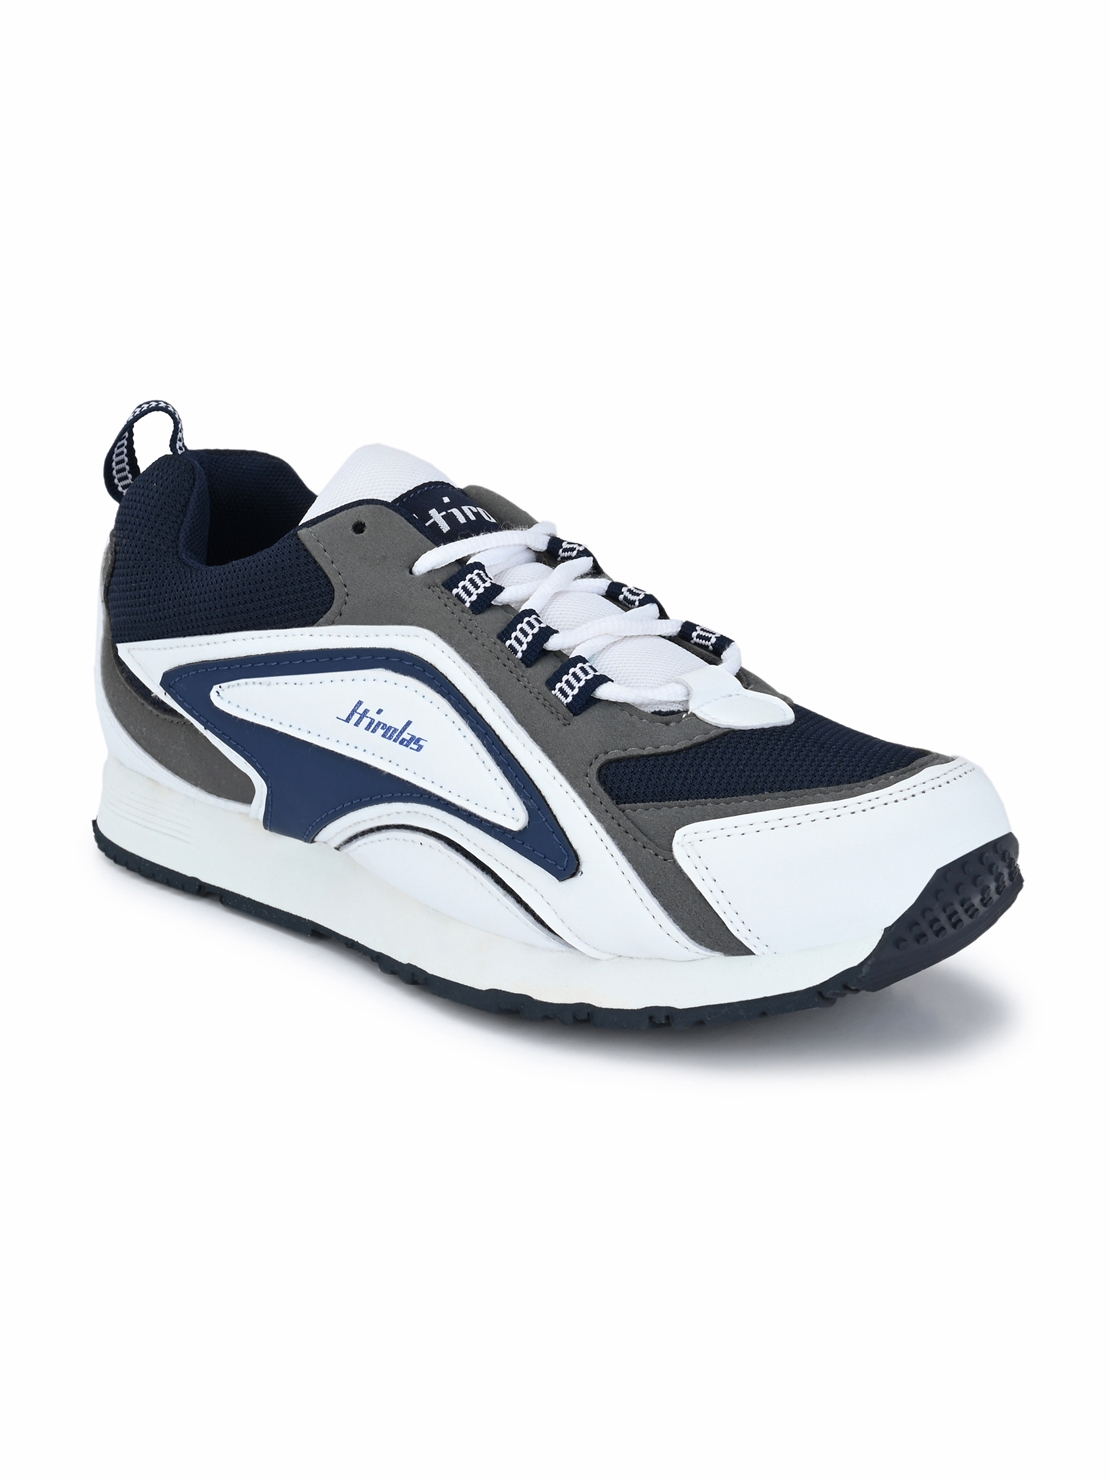 Hirolas | Hirolas Men's Multisport Sneaker Shoes- White/Blue